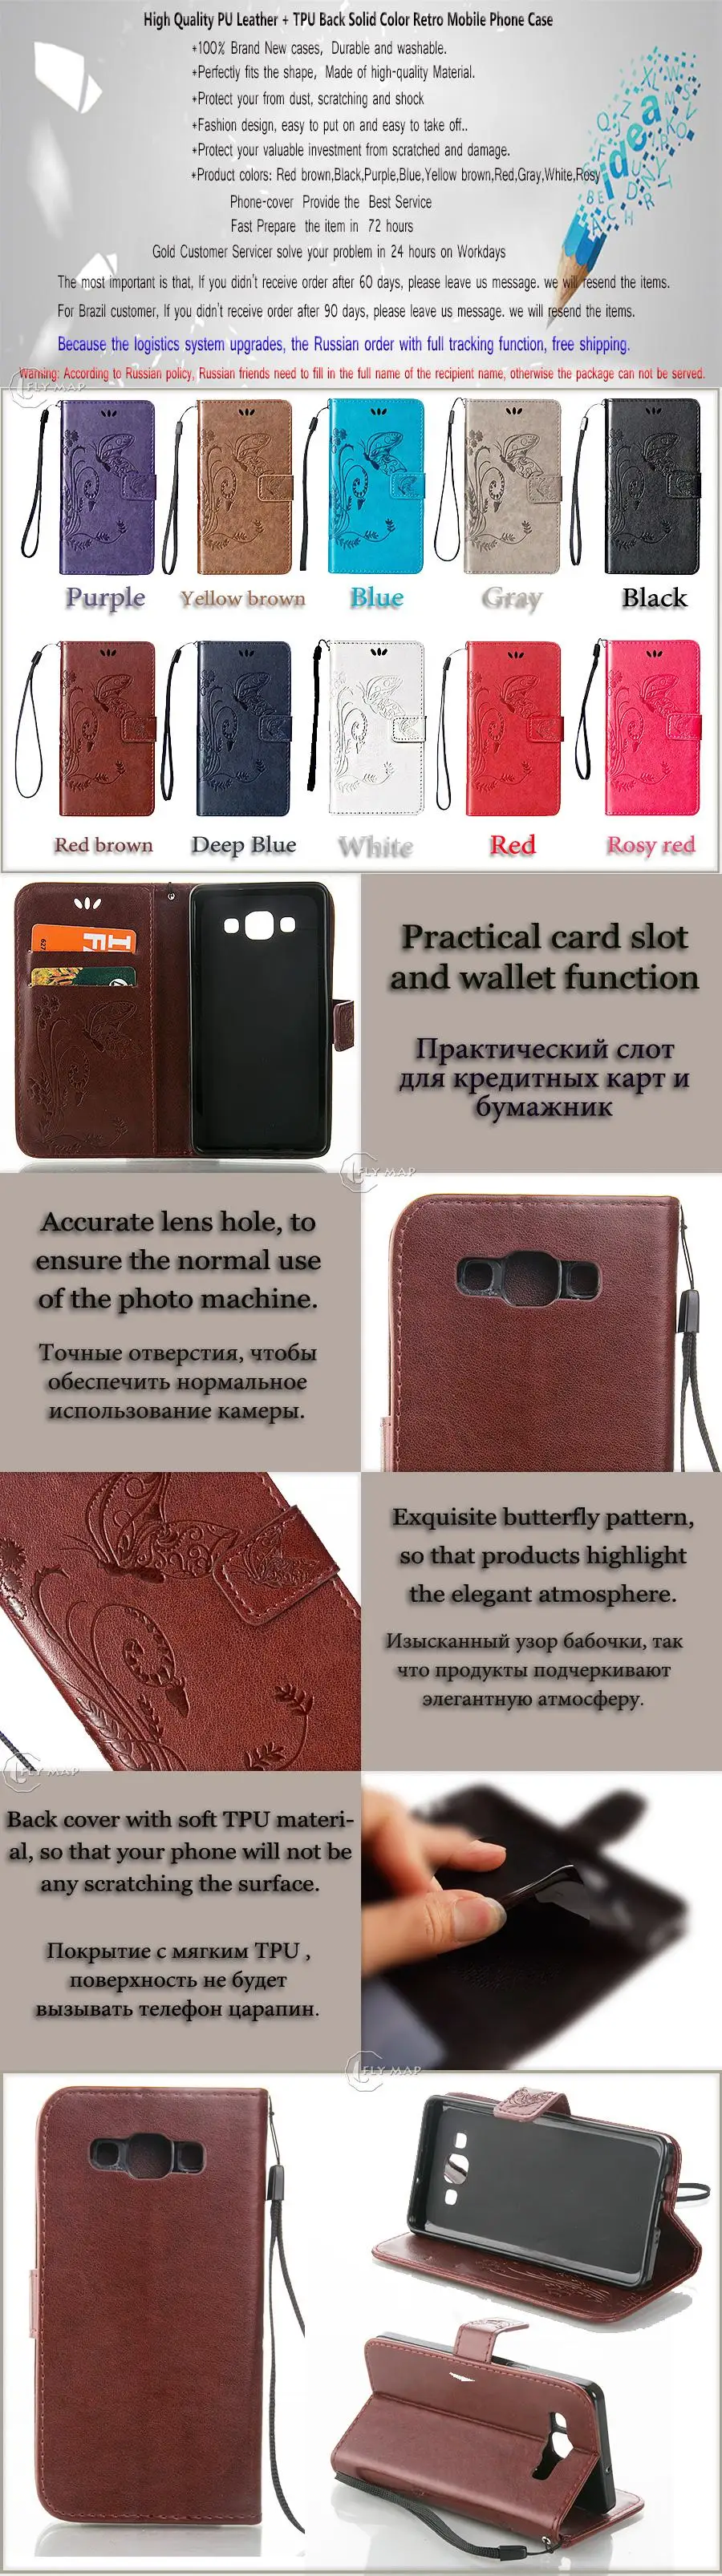 Coque для samsung Galaxy A5 A500 A500FU Чехол кожаный телефонный чехол с SM-A500 SM-A500F SM-A500H SM-A500FU бабочка флип-чехол